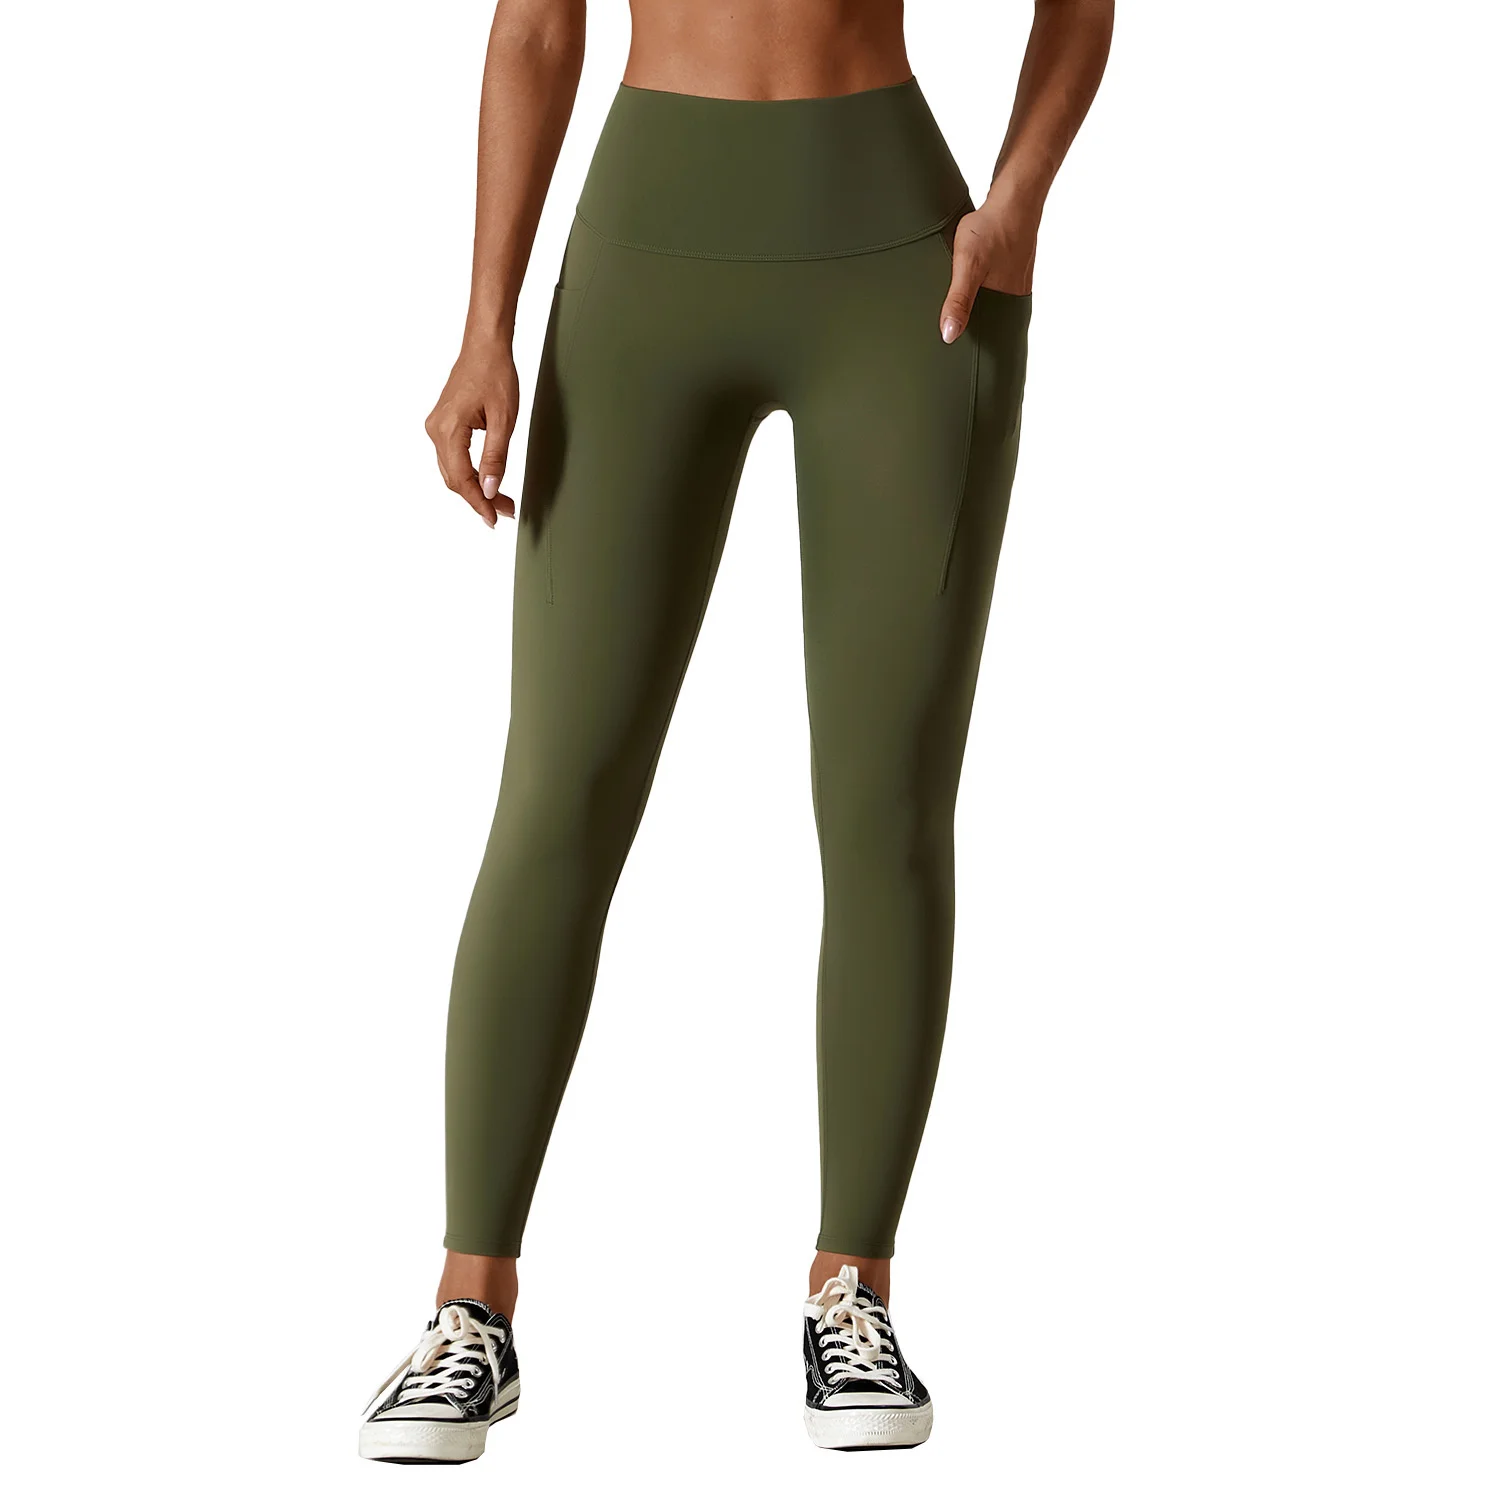 Yoga Pants With Pockets Women Sport Leggings Jogging Workout